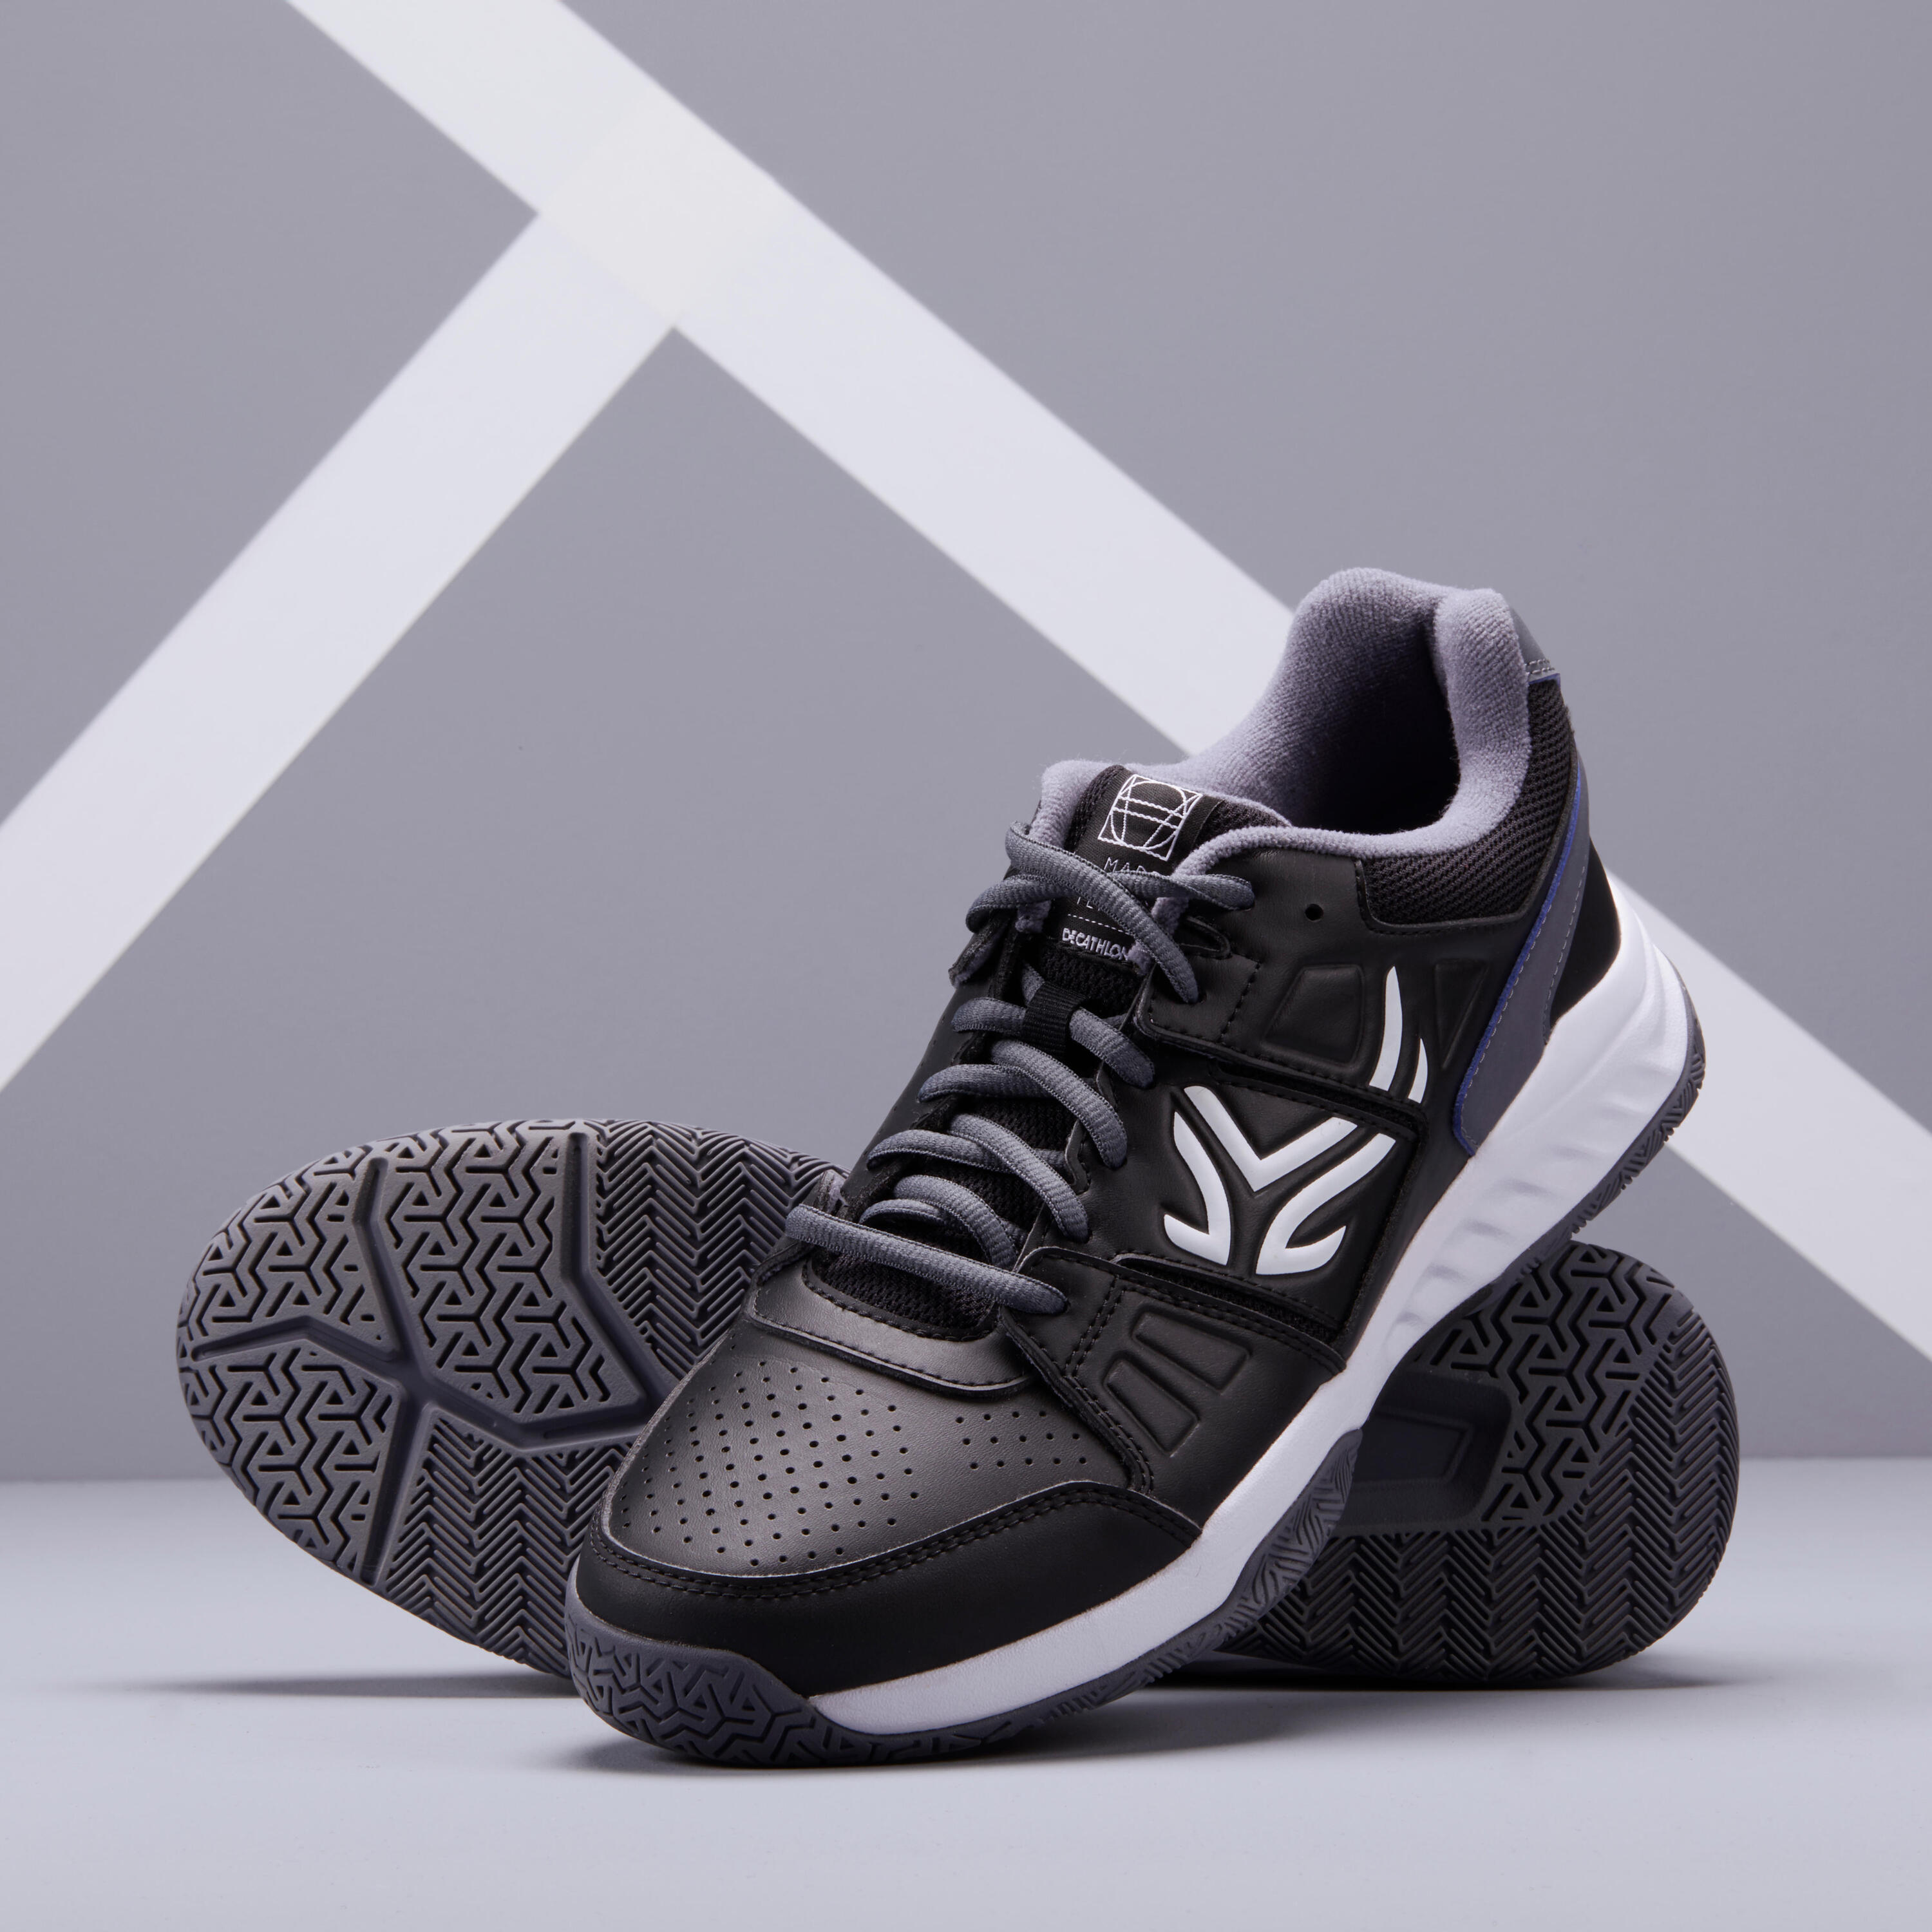 TS160 Multi-Court Tennis Shoes - Black 5/7